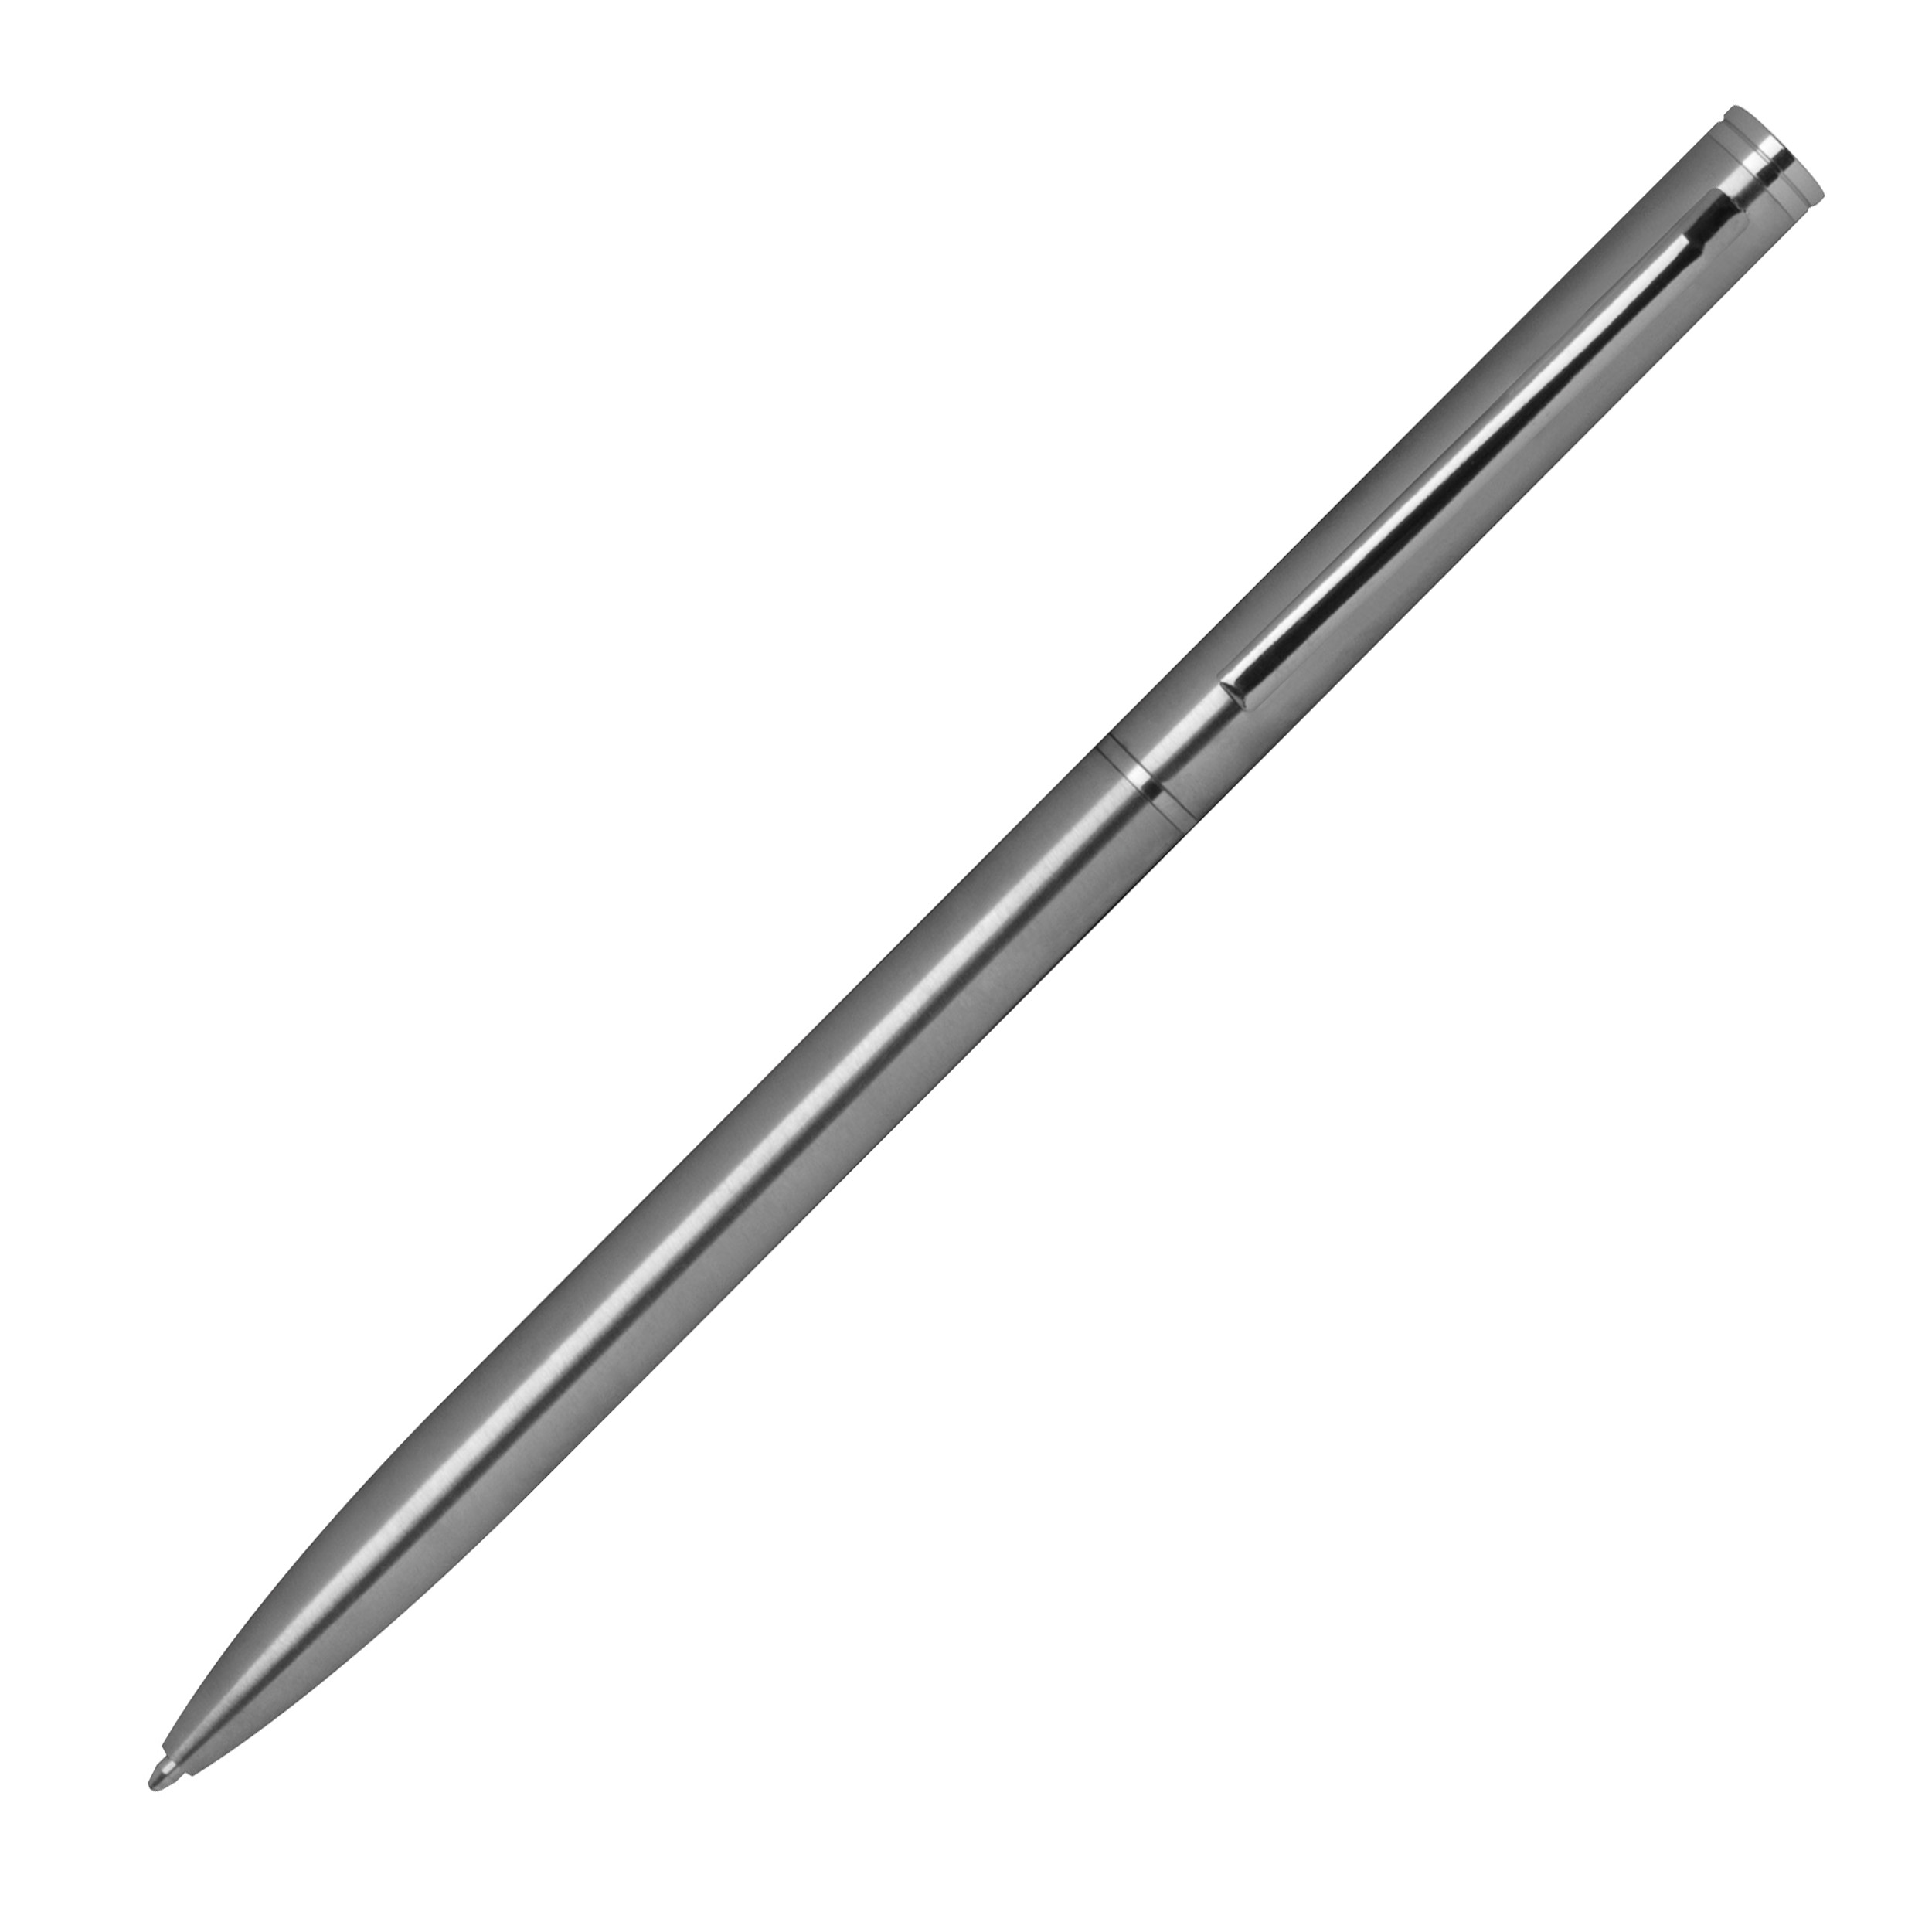 Metall-Kugelschreiber in schlanker Form